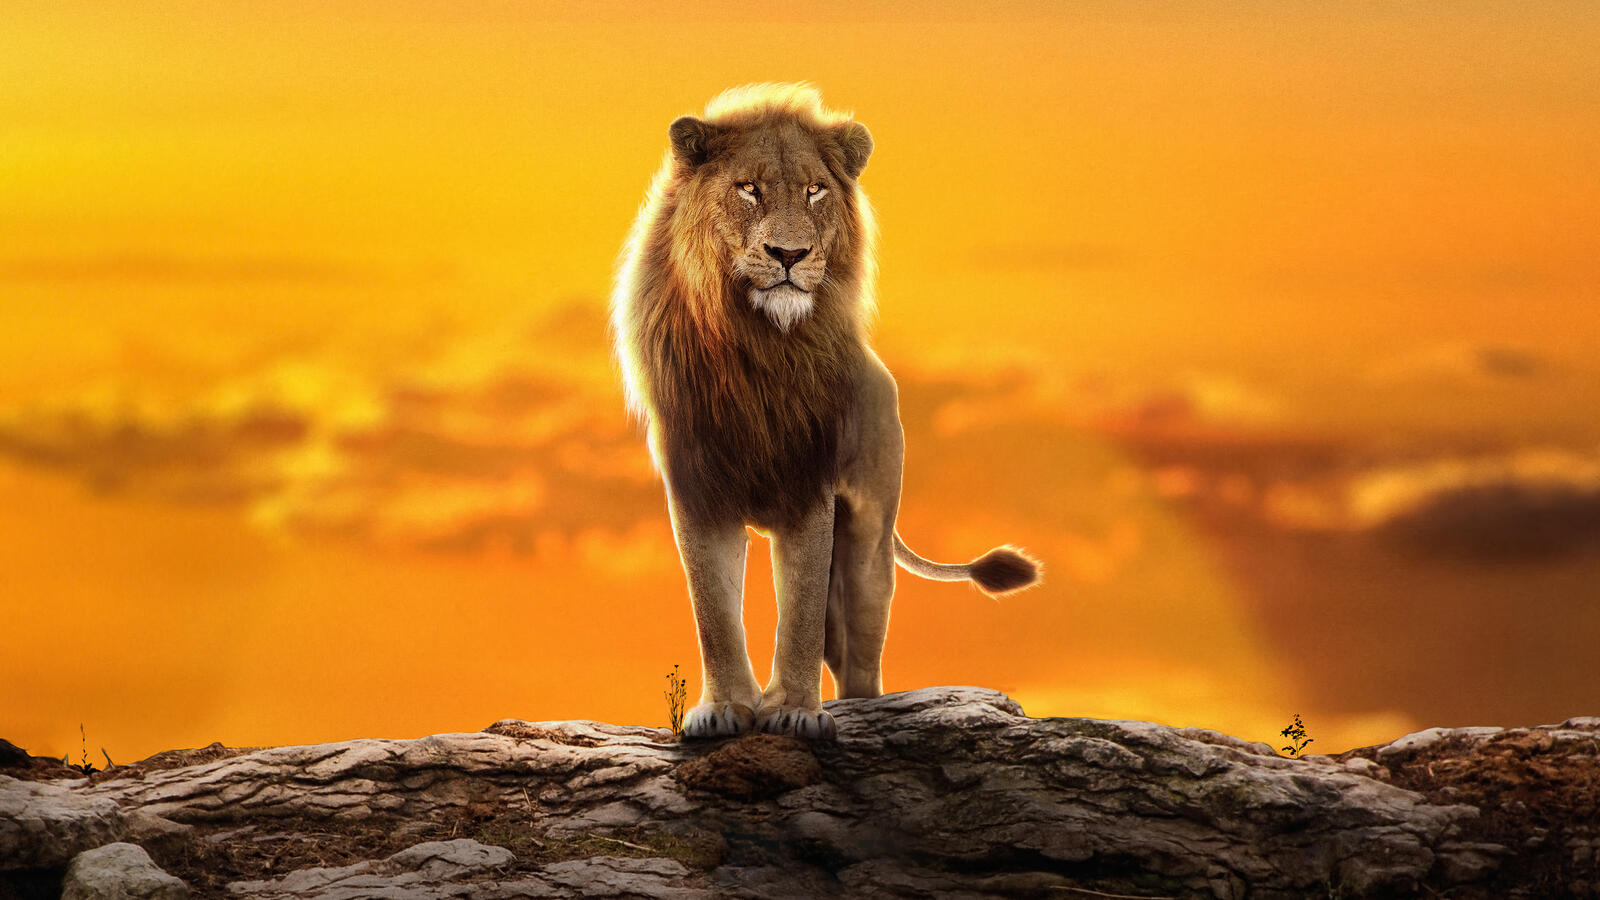 Бесплатное фото Король лев стоит на сколе при закате дня